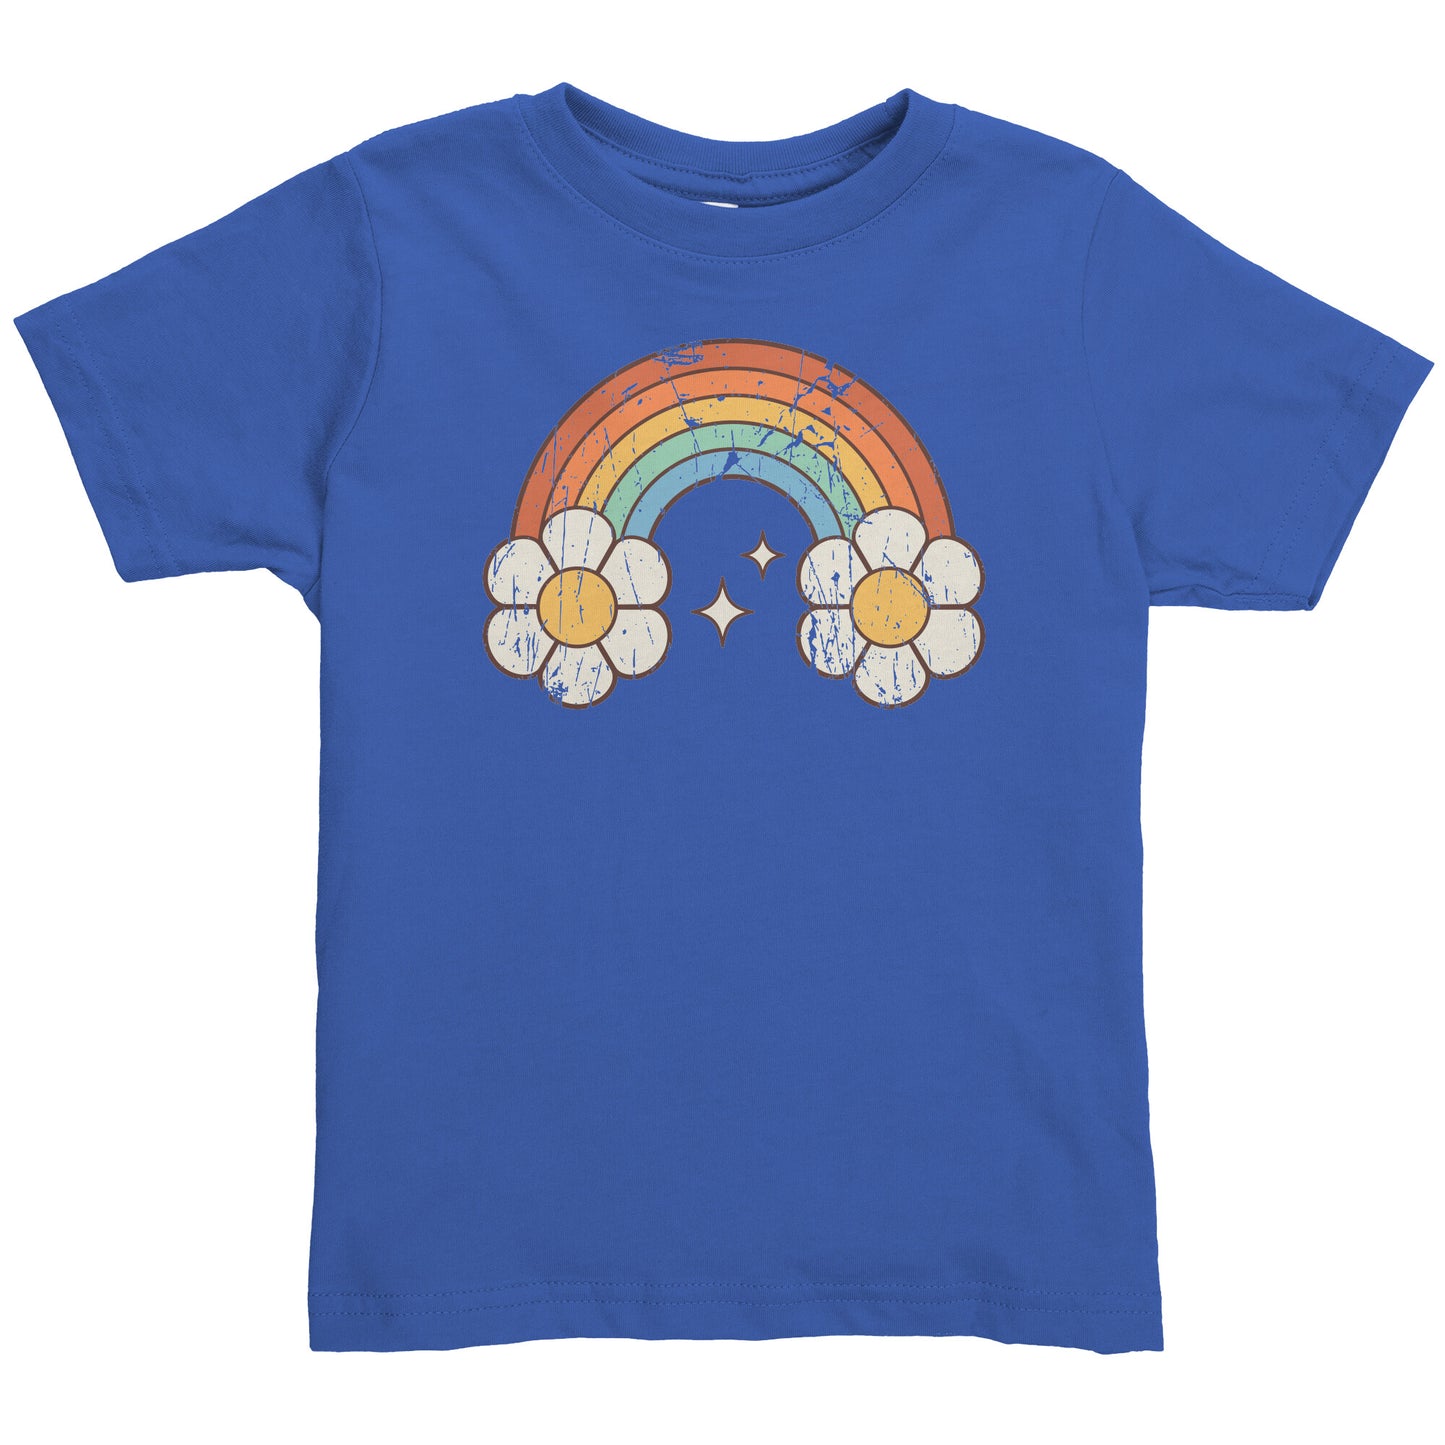 Vintage Rainbow Toddler Shirt